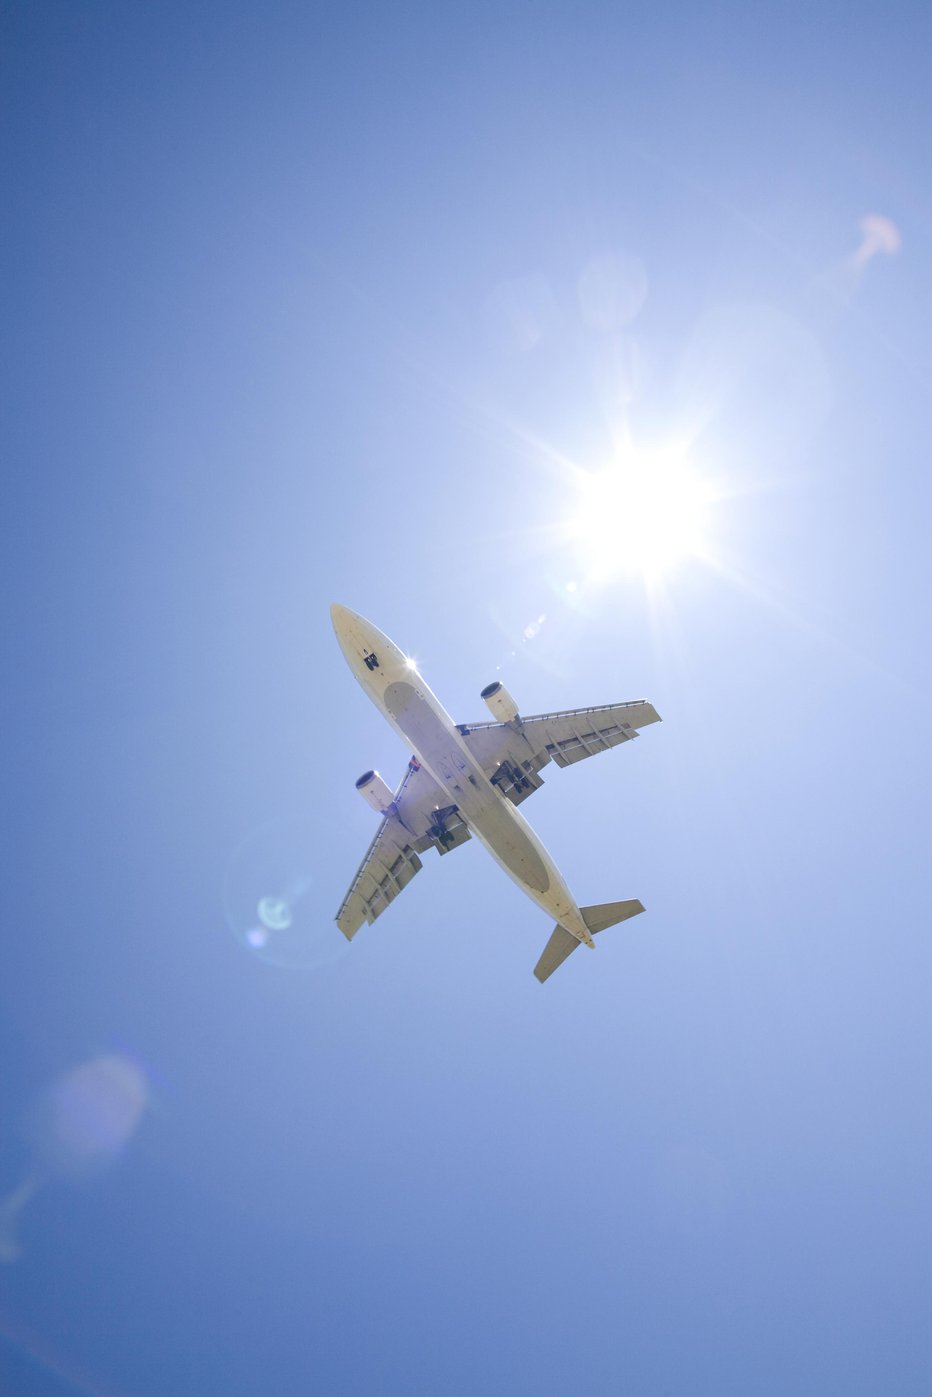 Fotografija: Letalo v zraku. FOTO: Guliver/thinkstock Getty